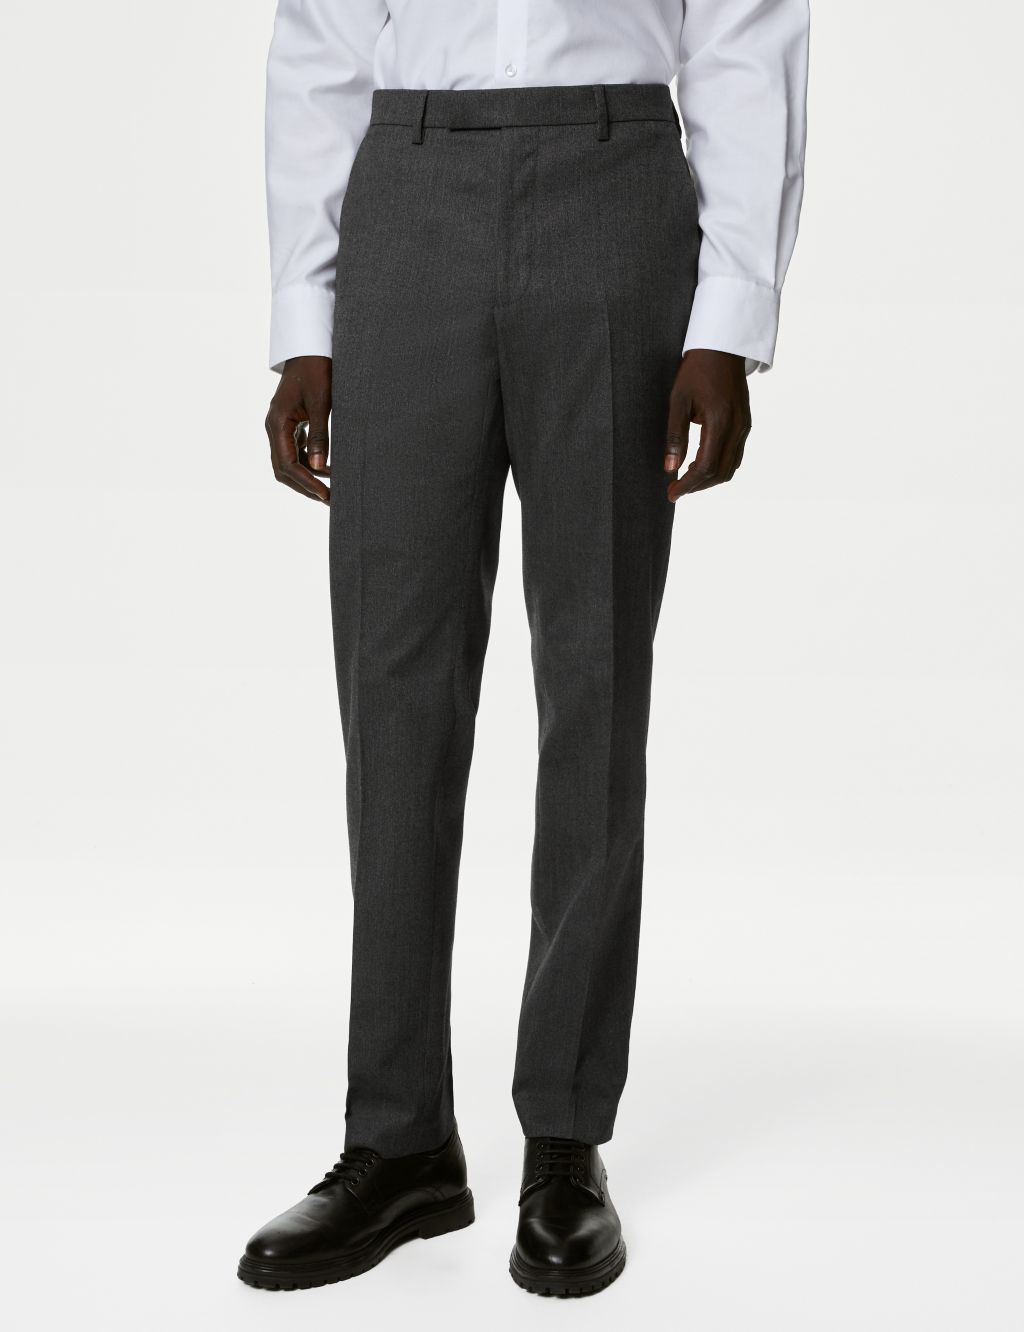 Slim Fit Stretch Textured Suit image 4